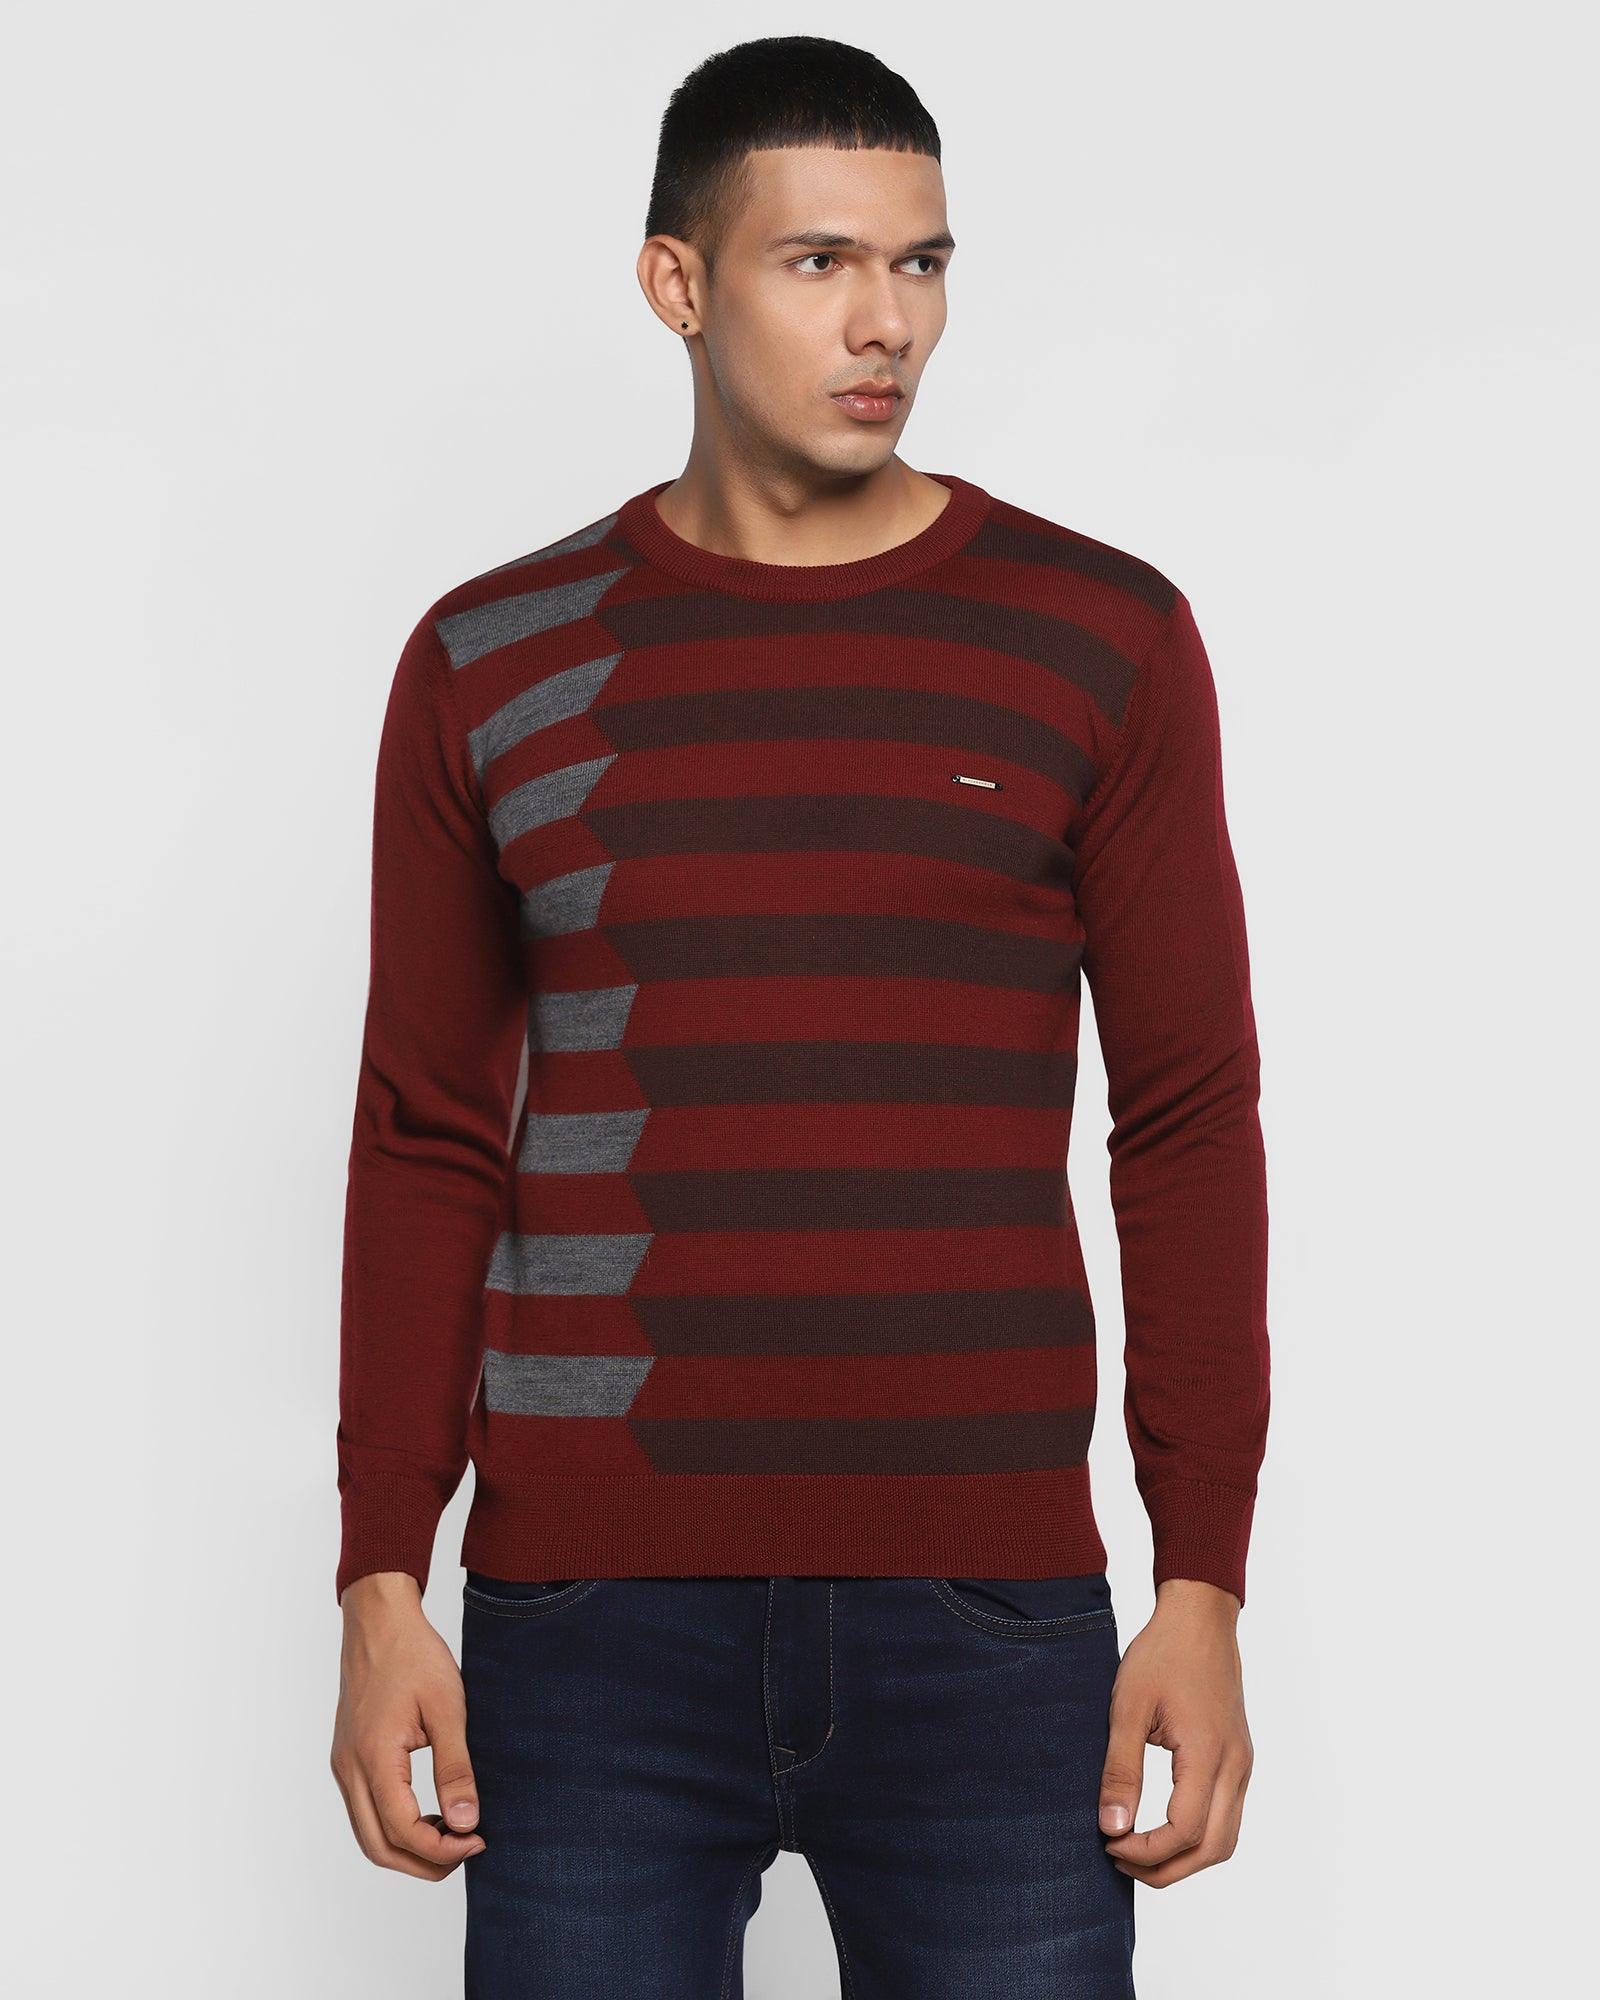 Crew Neck Maroon Printed Sweater - Leech